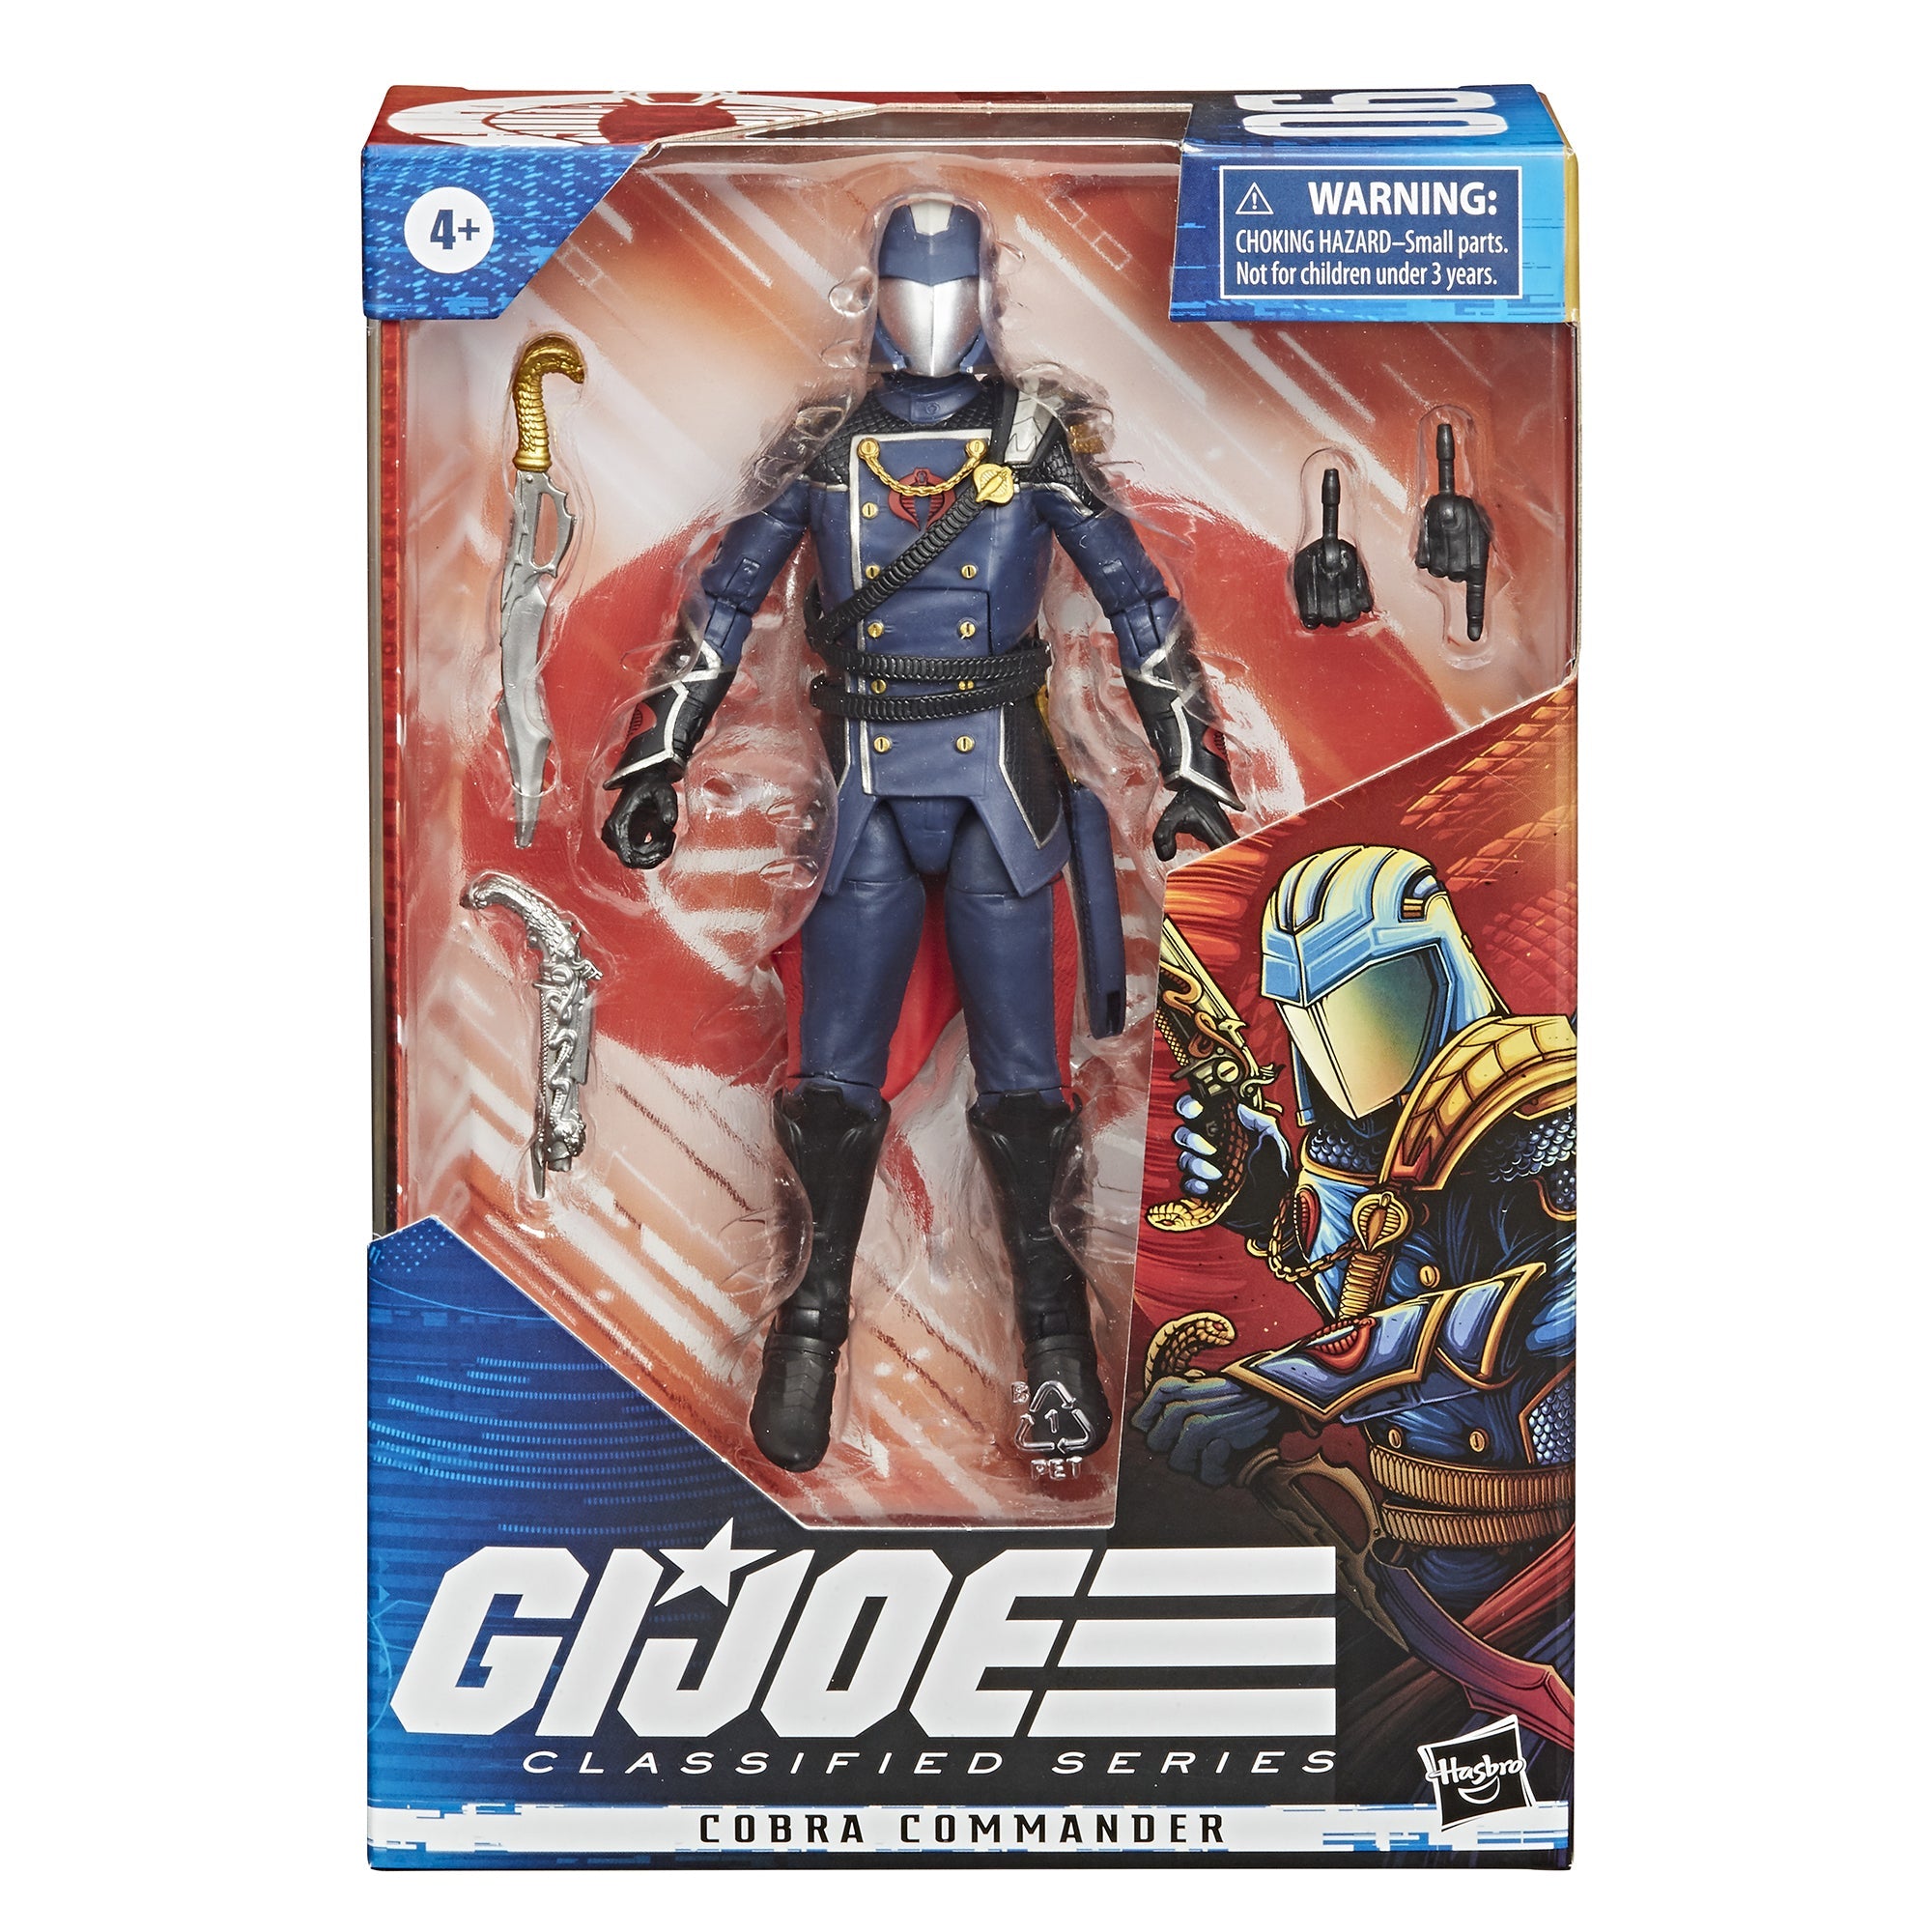 G.I. Joe Classified Series Cobra Commander Action Figure